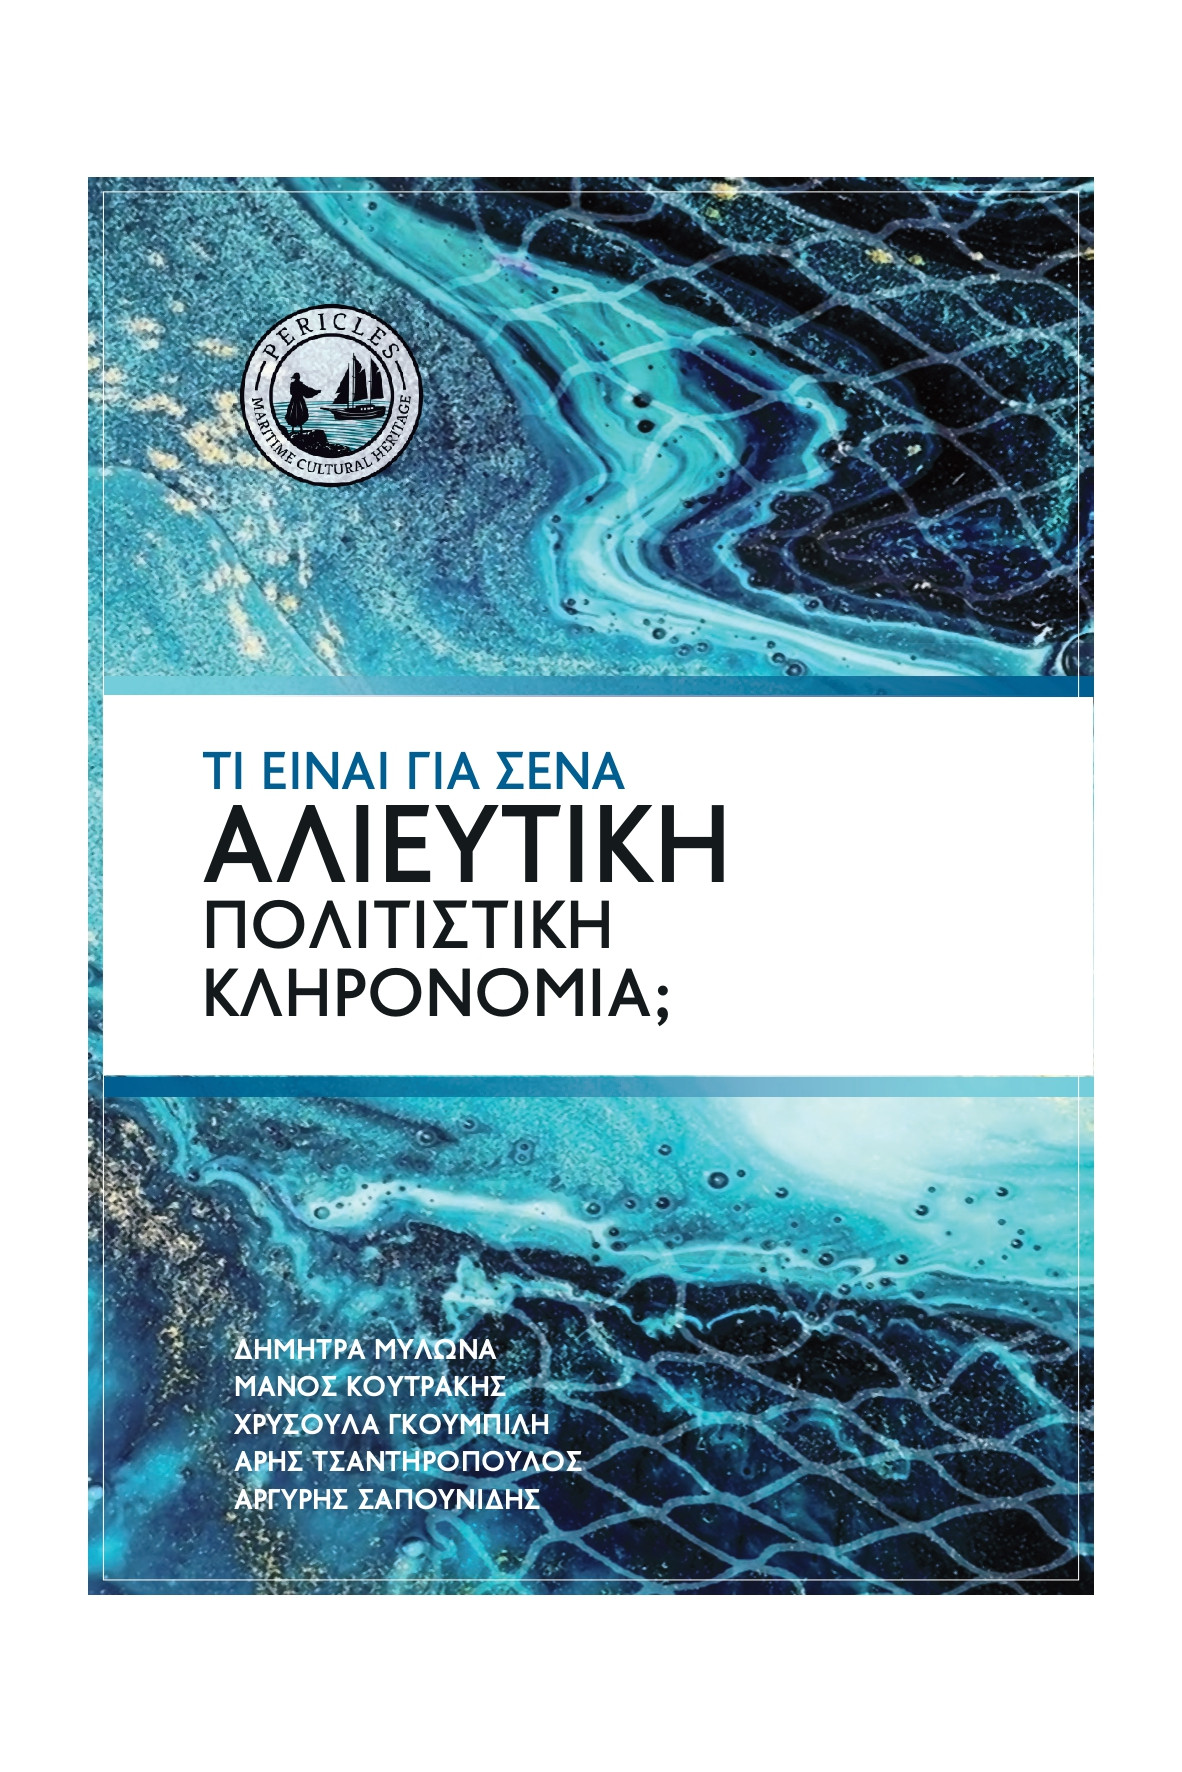 Fishing cultural heritage in NE Aegean